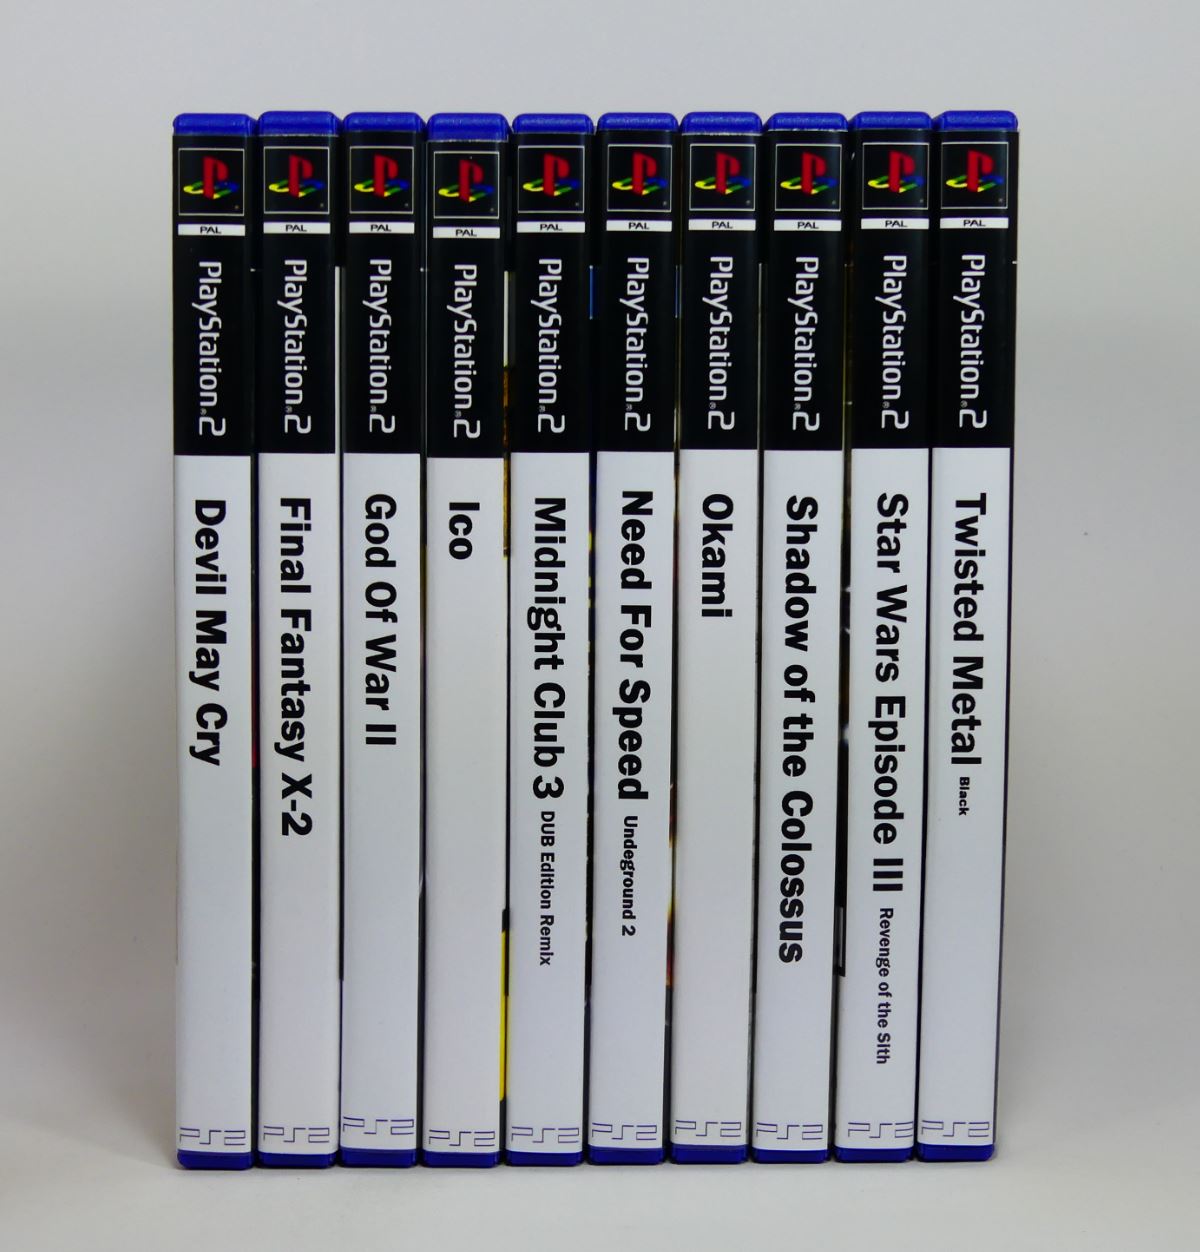 Gran Turismo 3 - PS2 Replacement Case